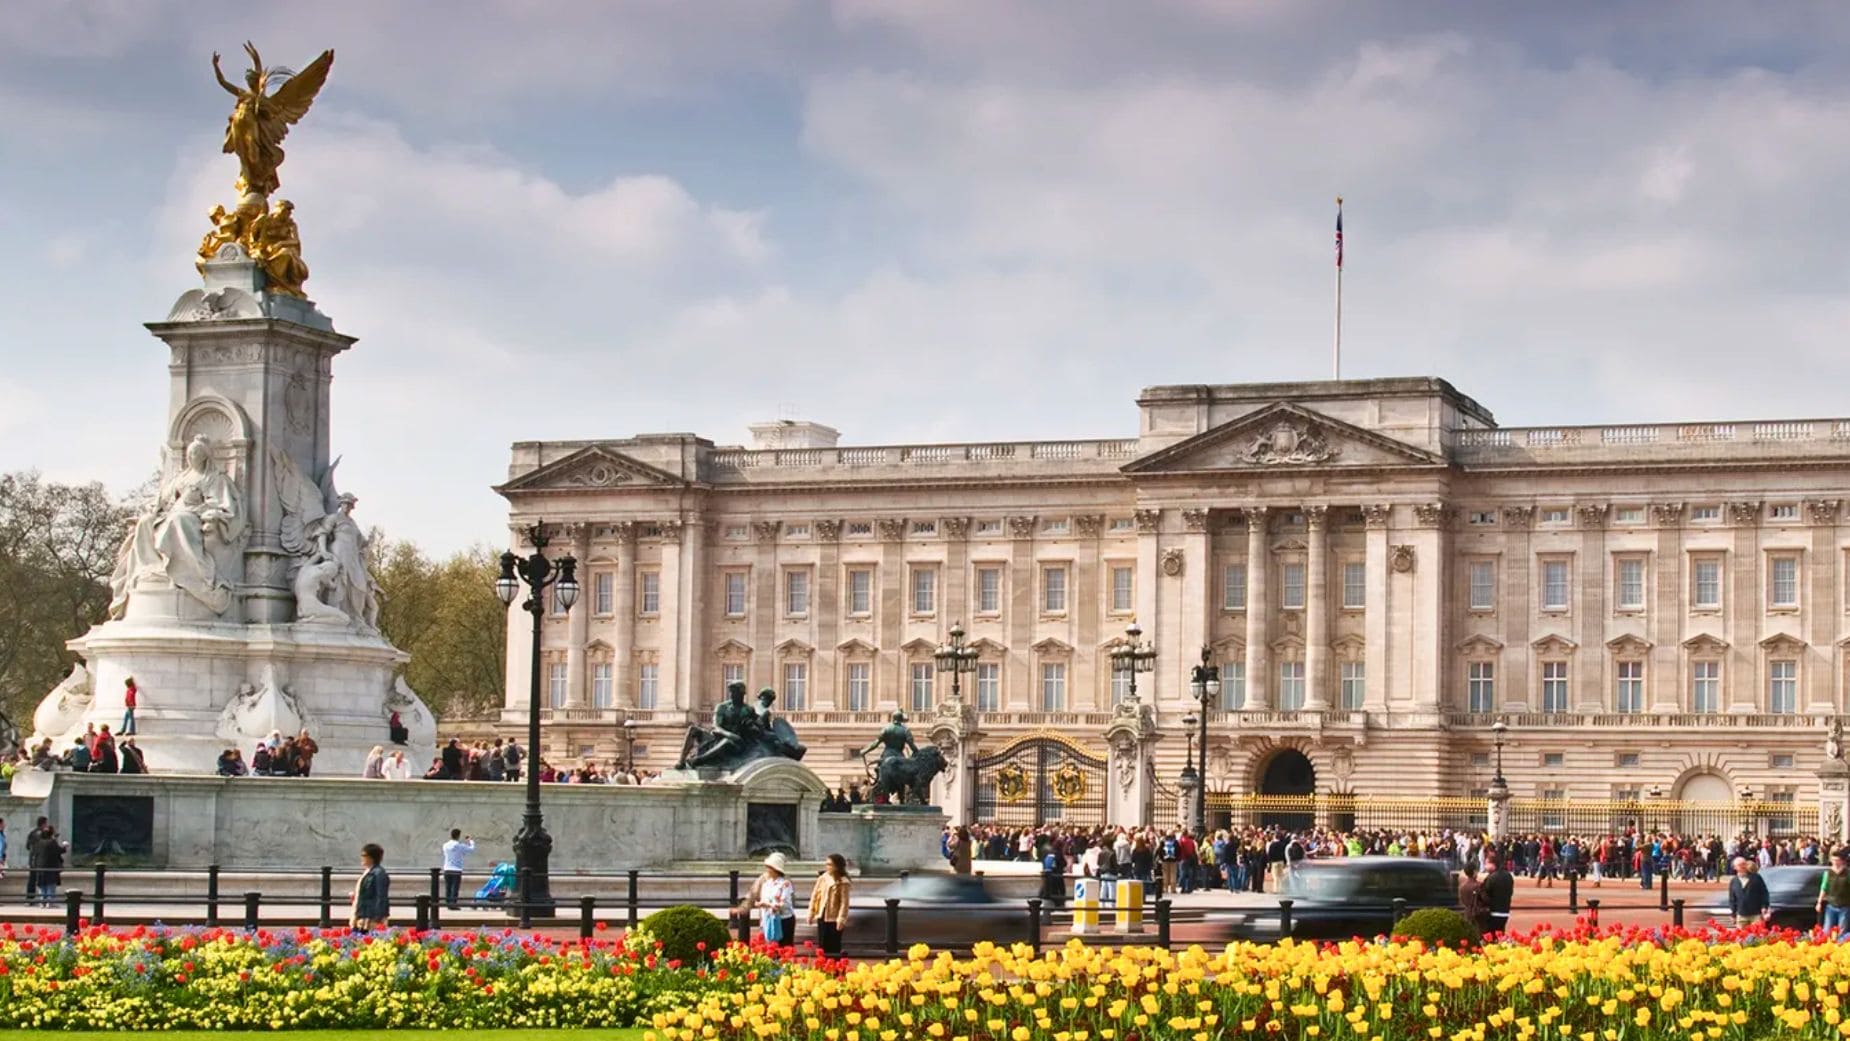 Oferta de empleo para proteger a Kate Middleton en el Buckingham Palace